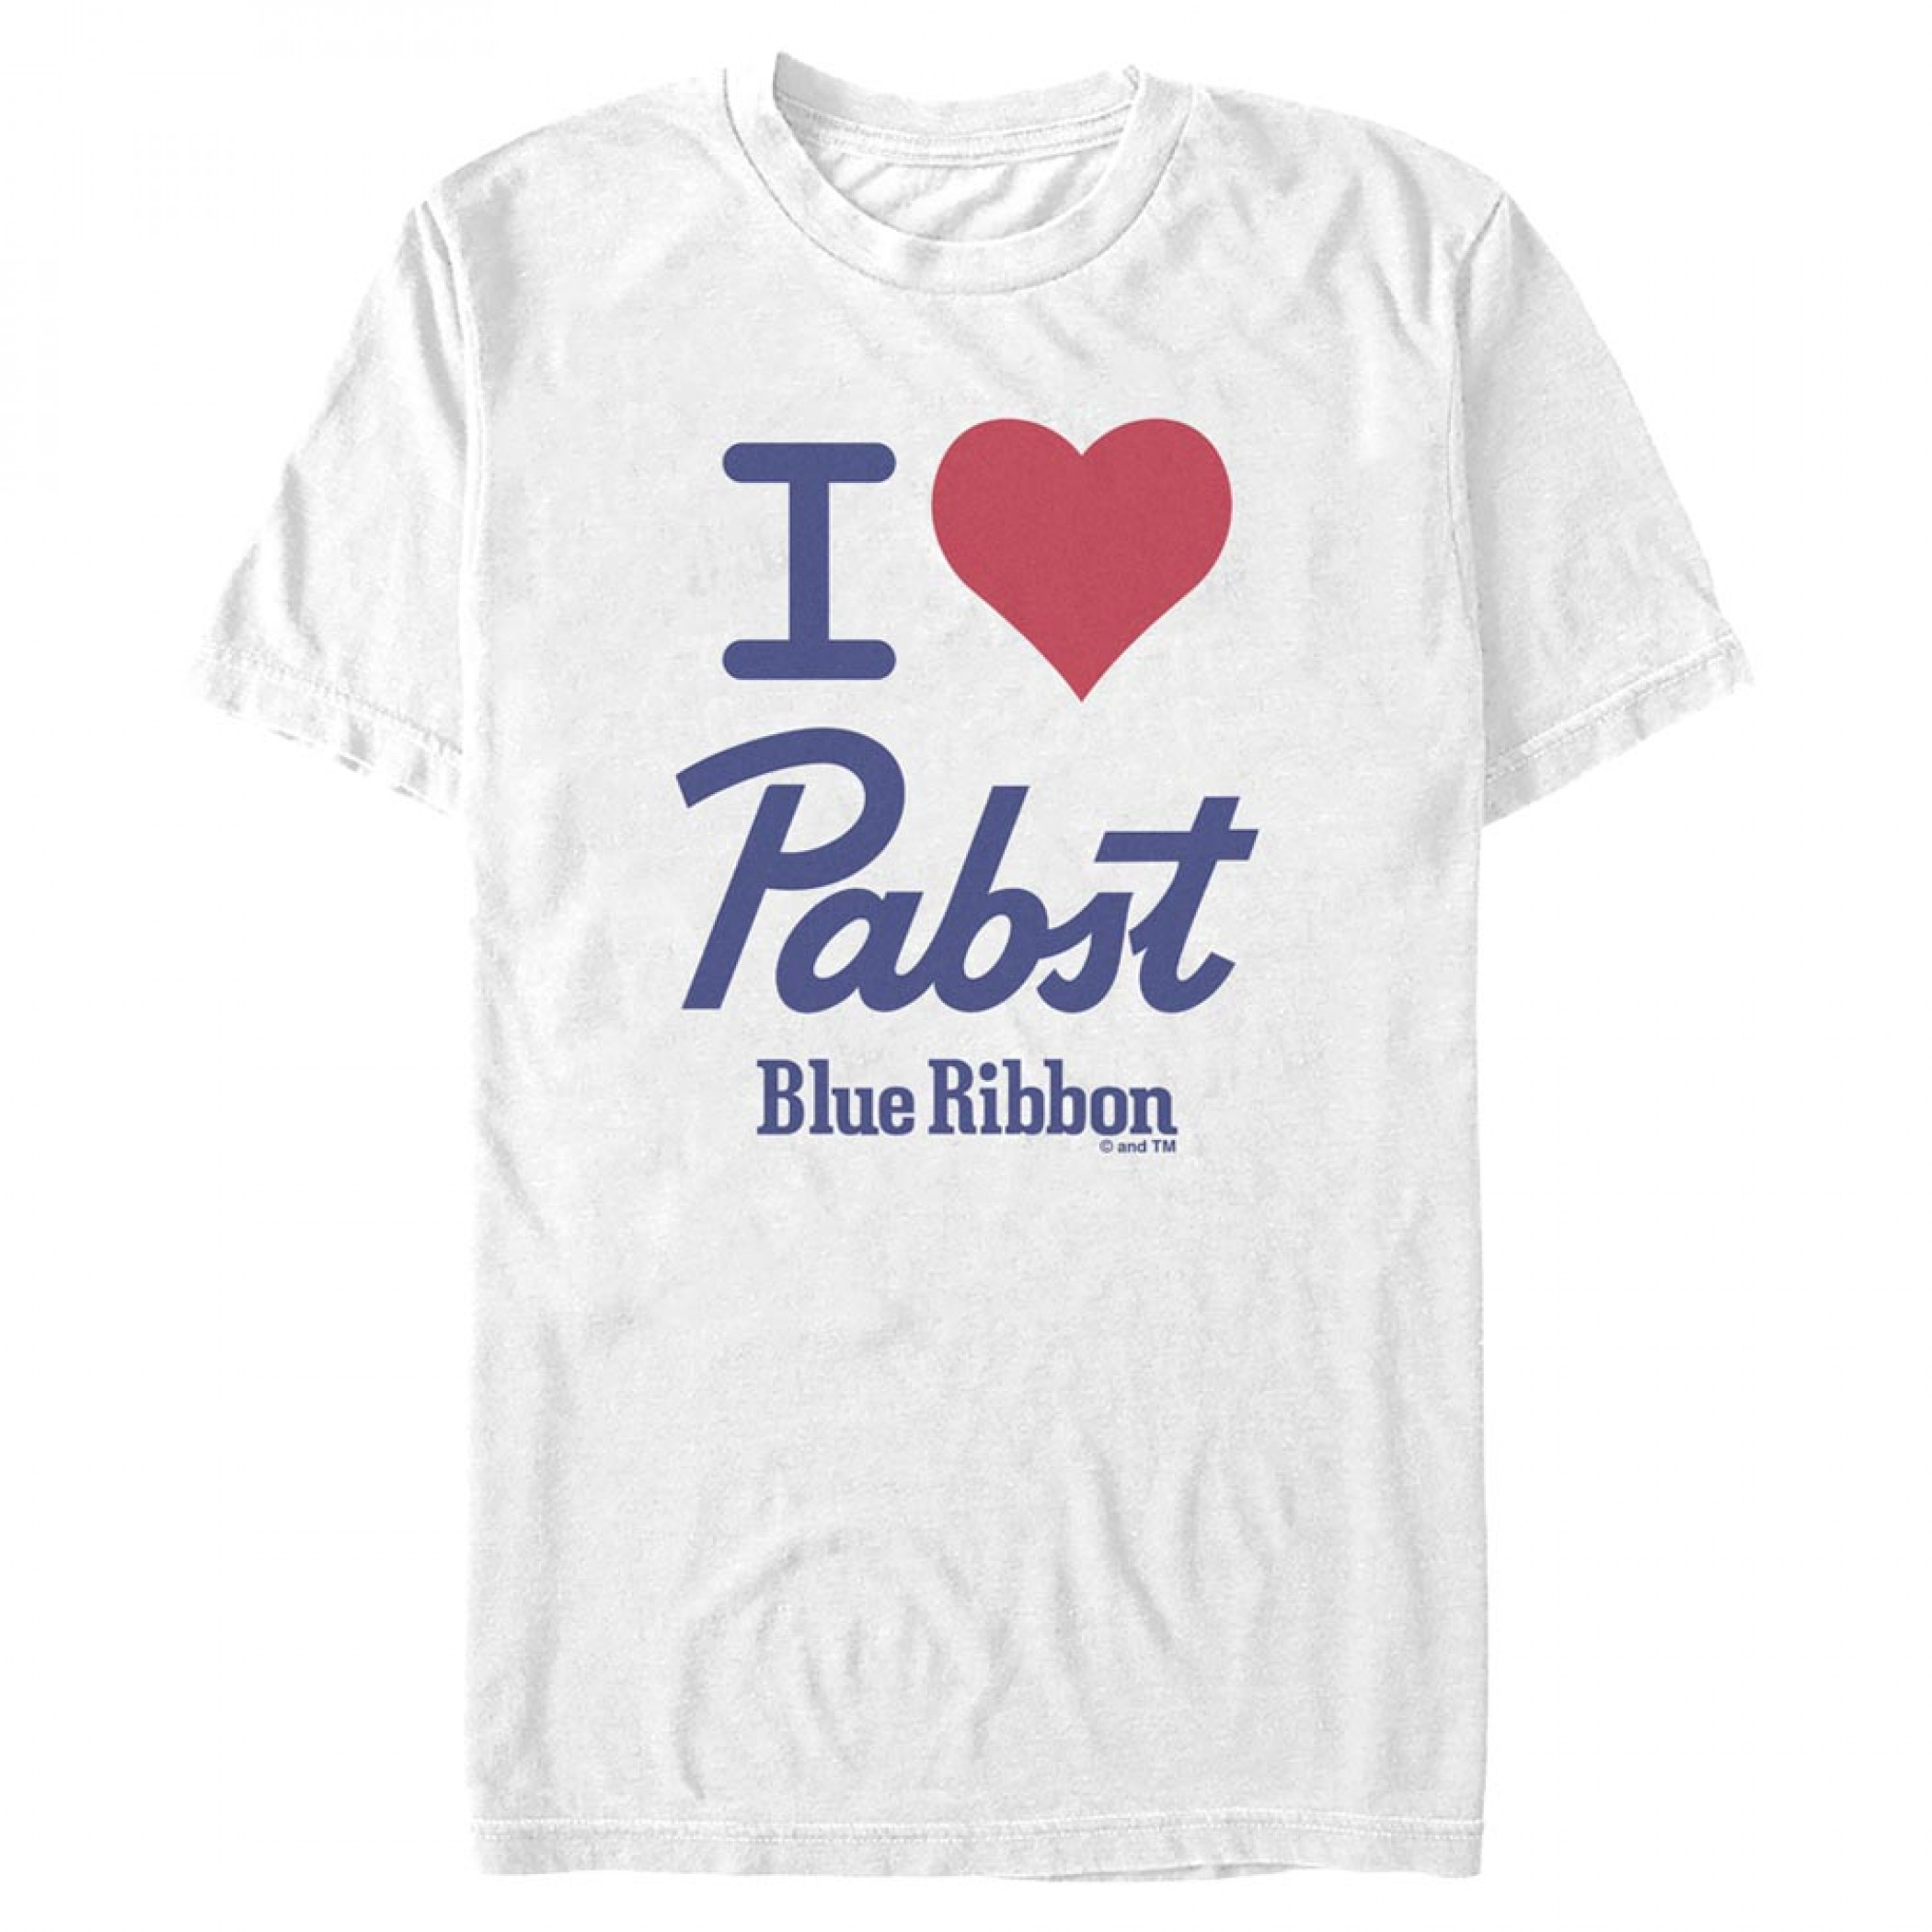 Pabst Blue Ribbon I heart Pabst T-Shirt